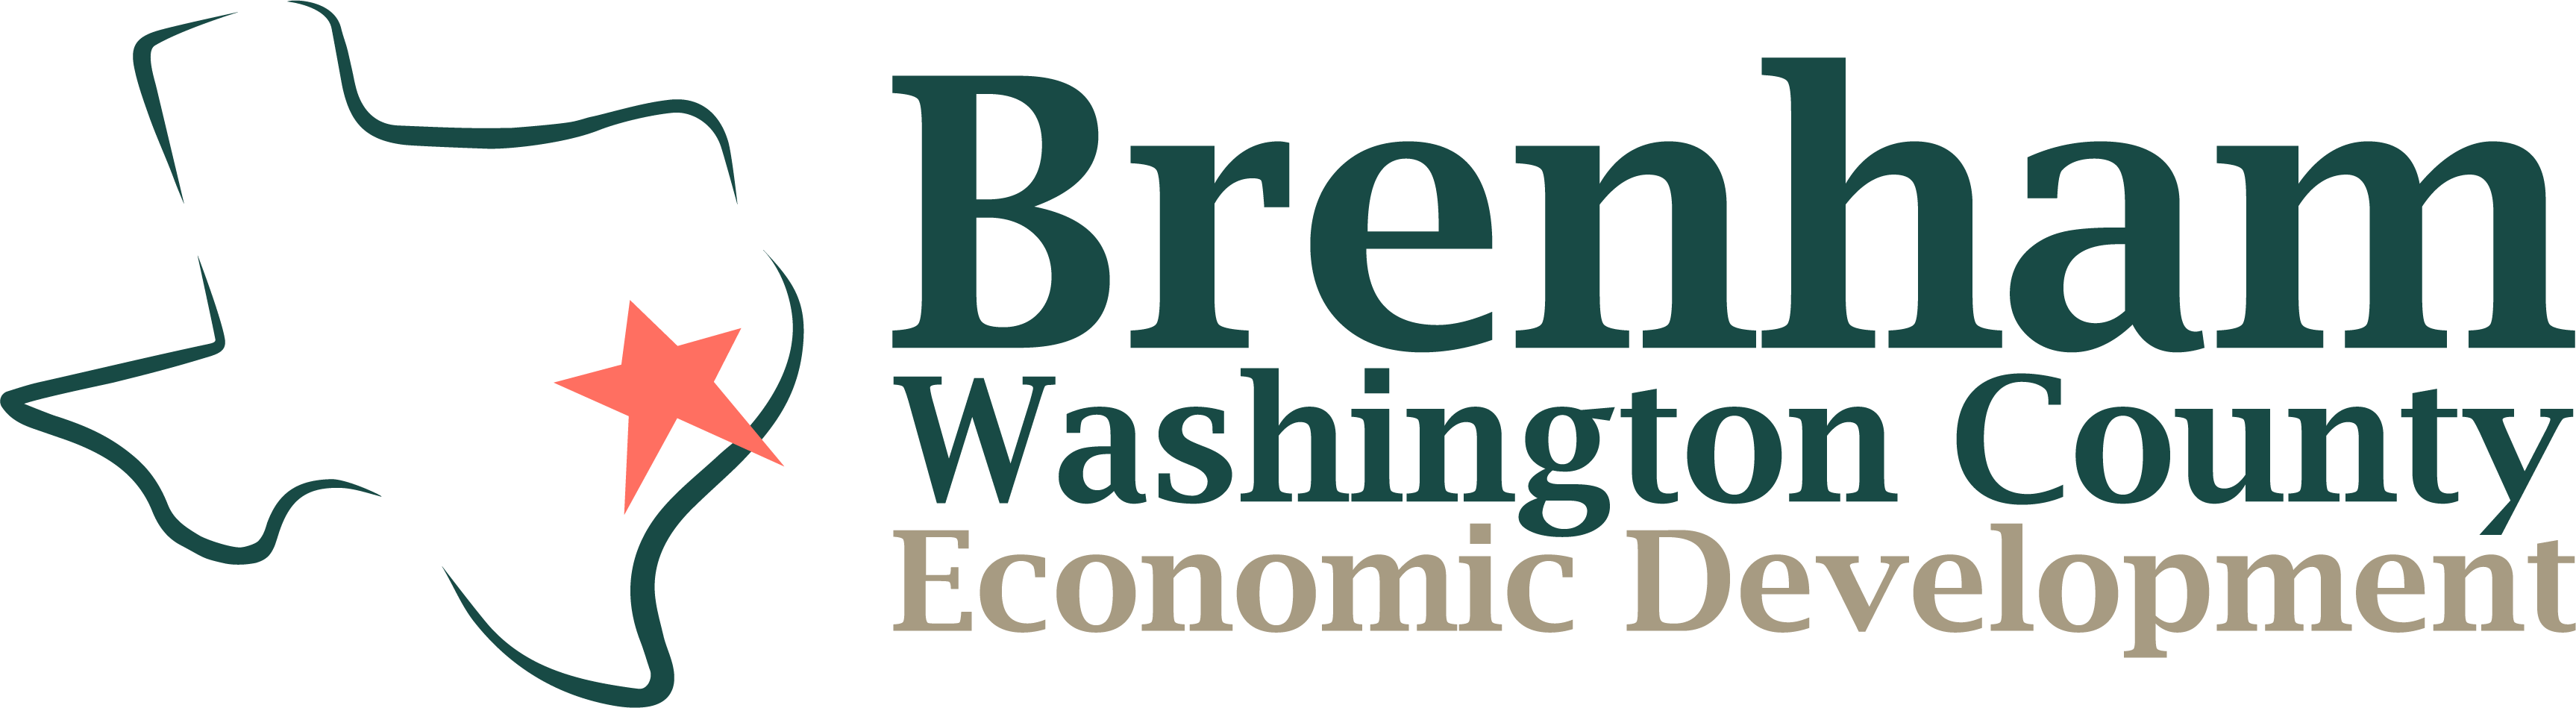 Brenham | Washington County Economic Development